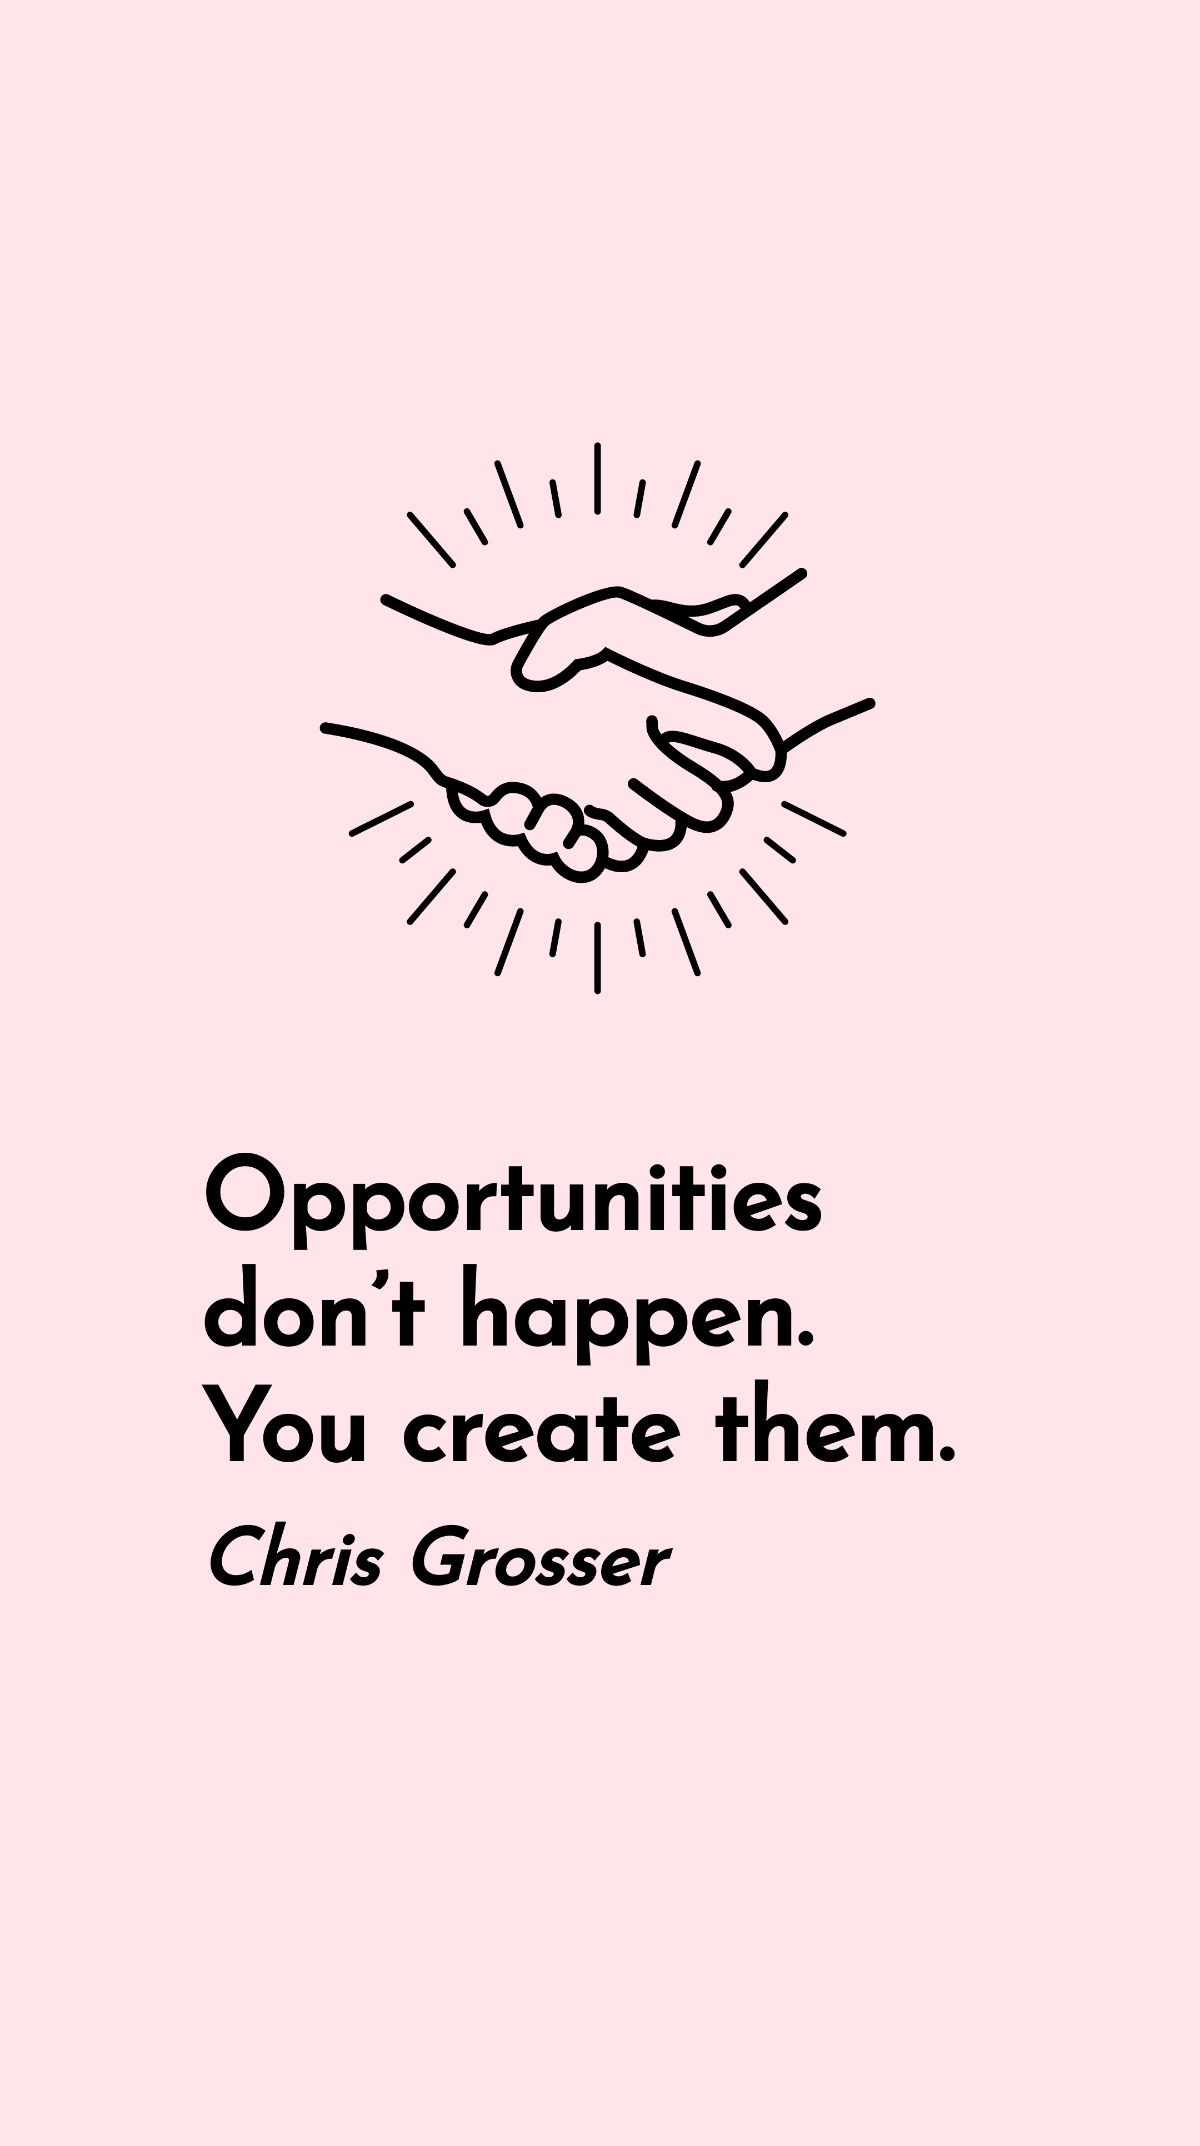 Chris Grosser - Opportunities don’t happen. You create them. Template